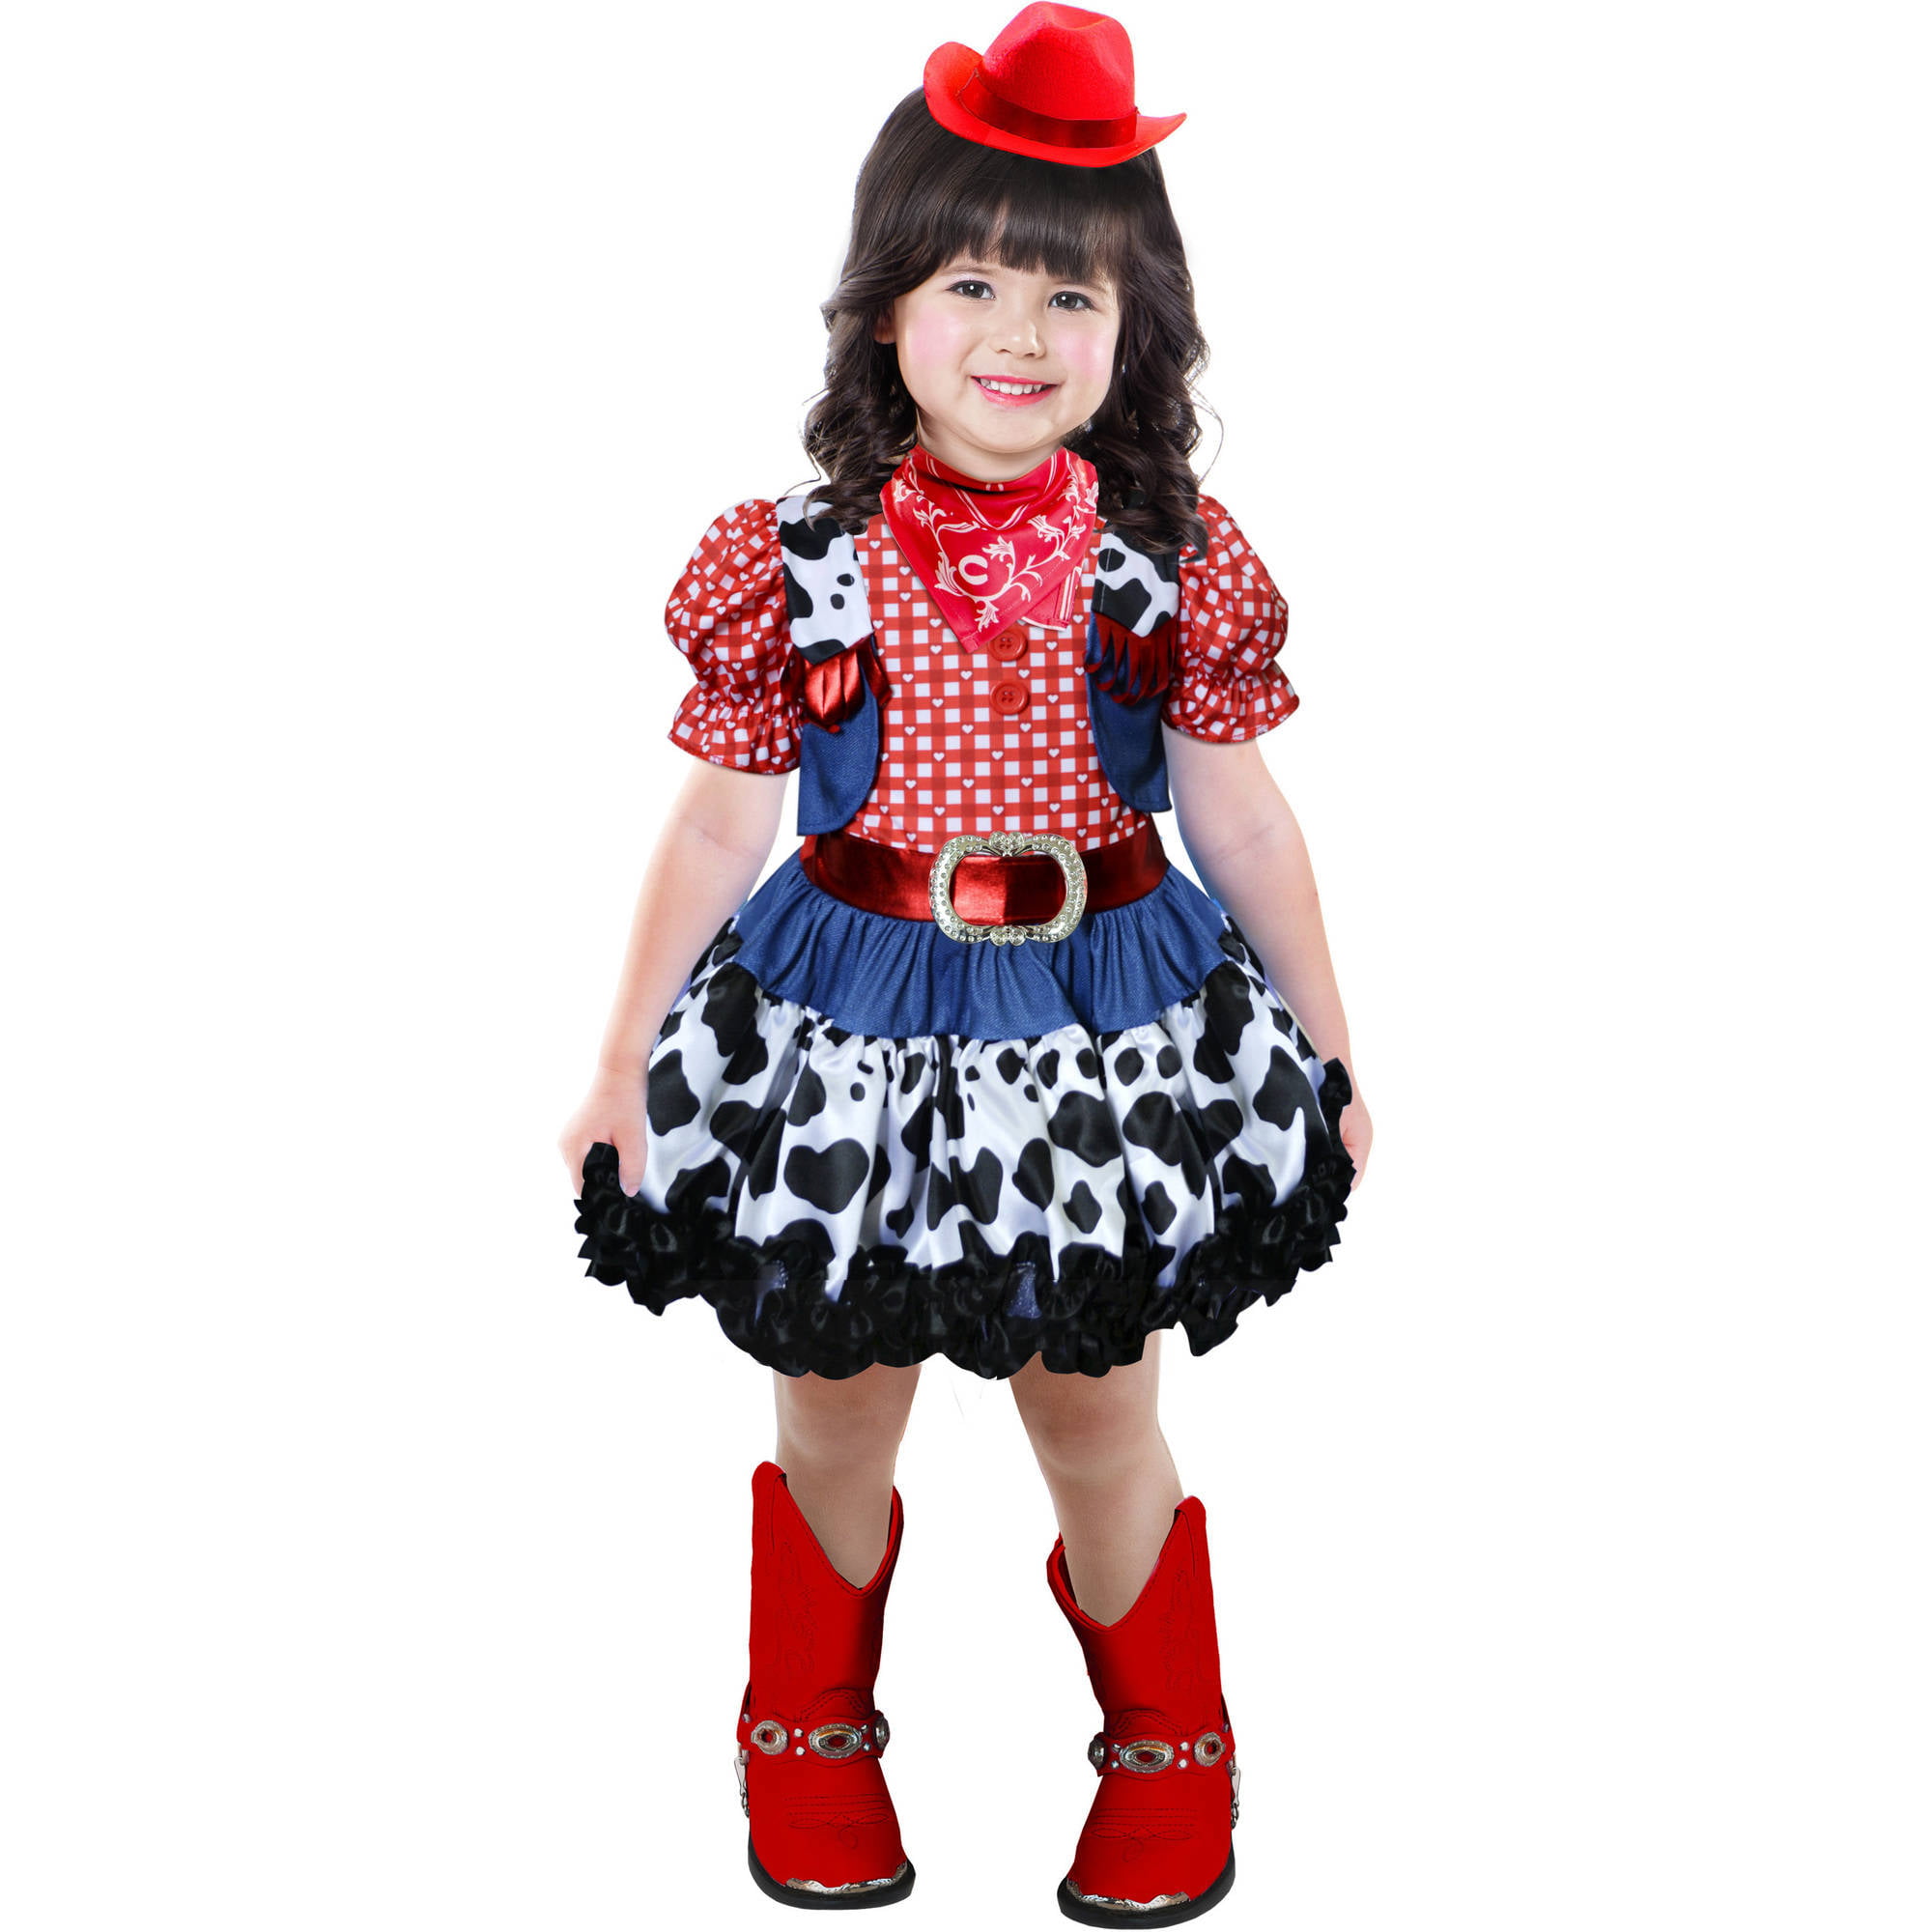 R Lil Rodeo Prnces Toddler Halloween Costume - Walmart.com - Walmart.com